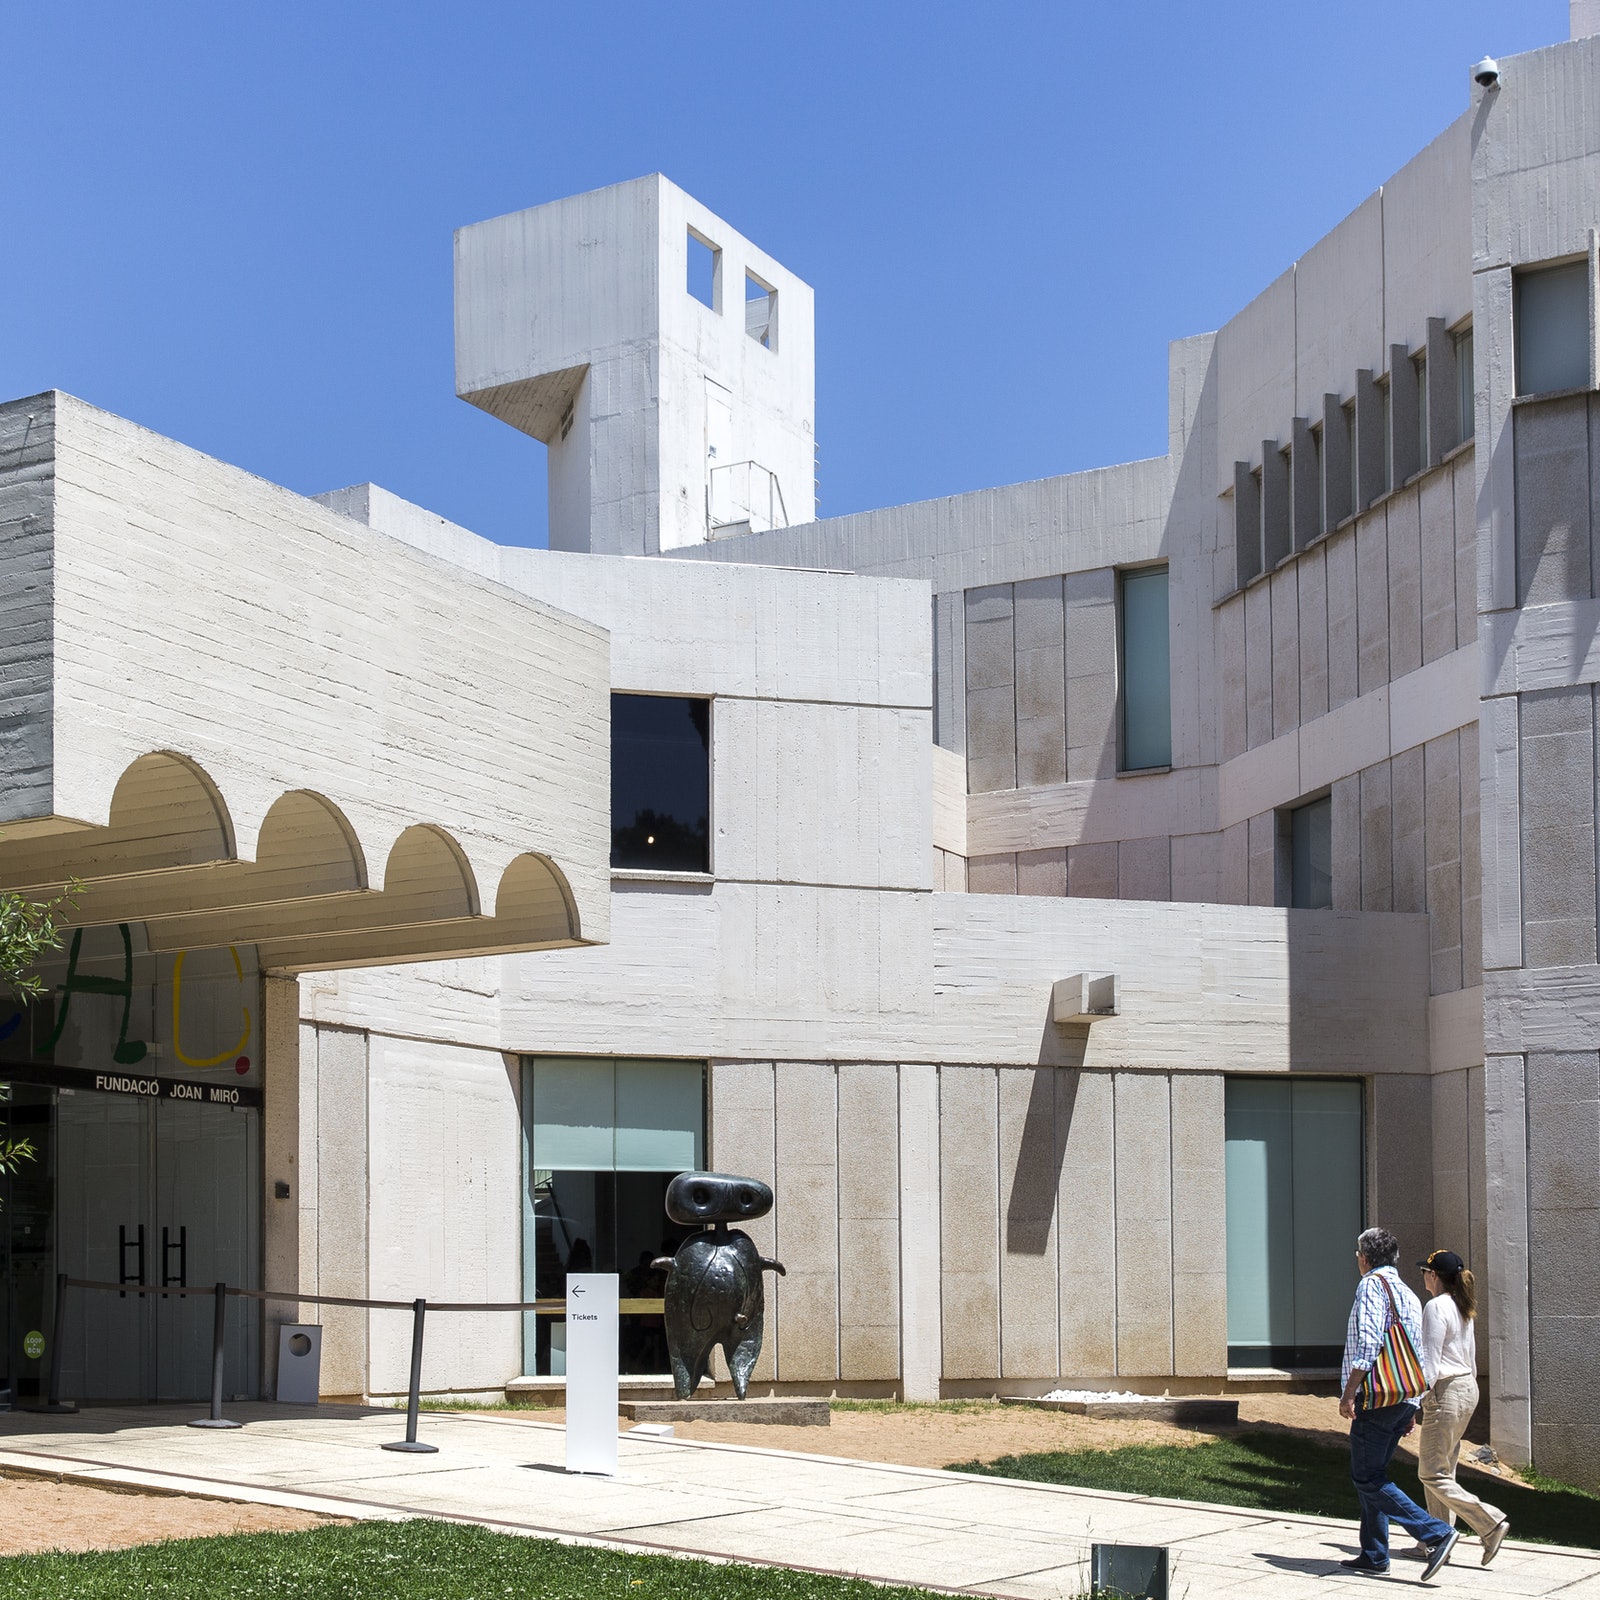 Fundació Joan Miró: Guided Visit in Spain